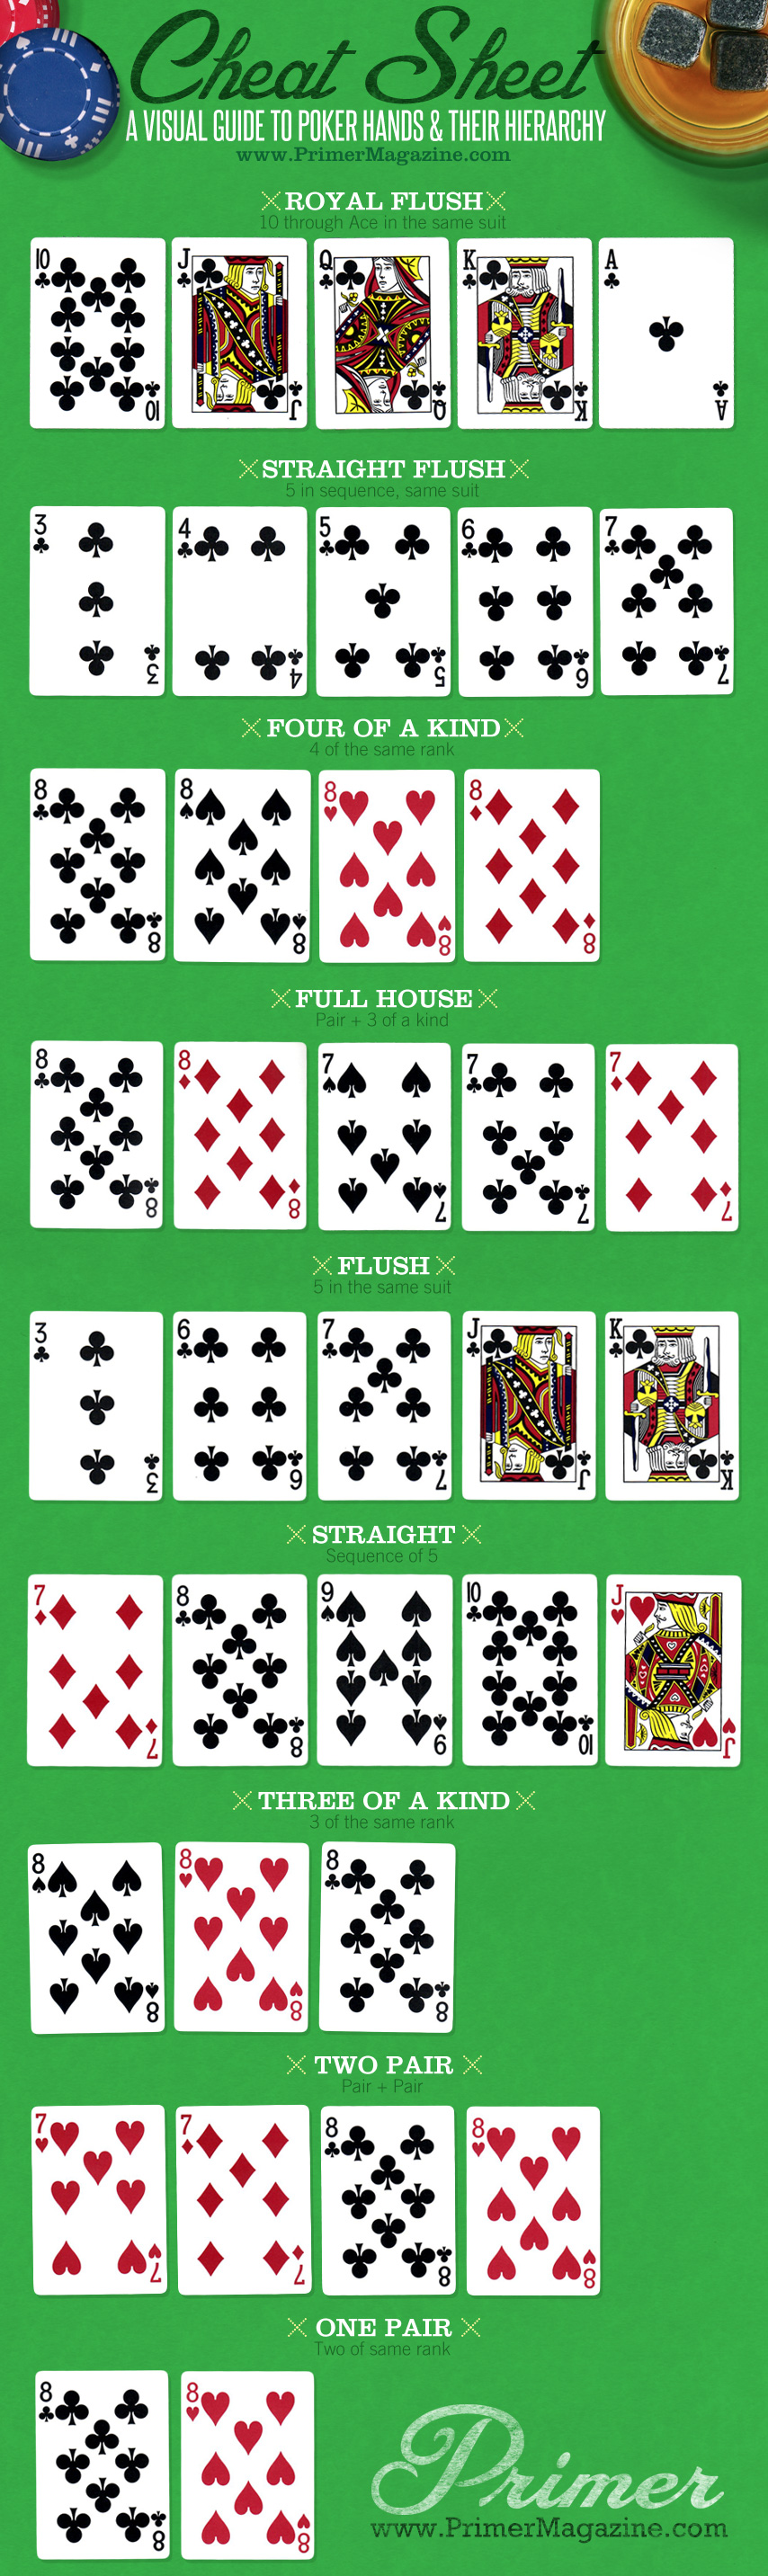 Poker For Dummies pdf -619131